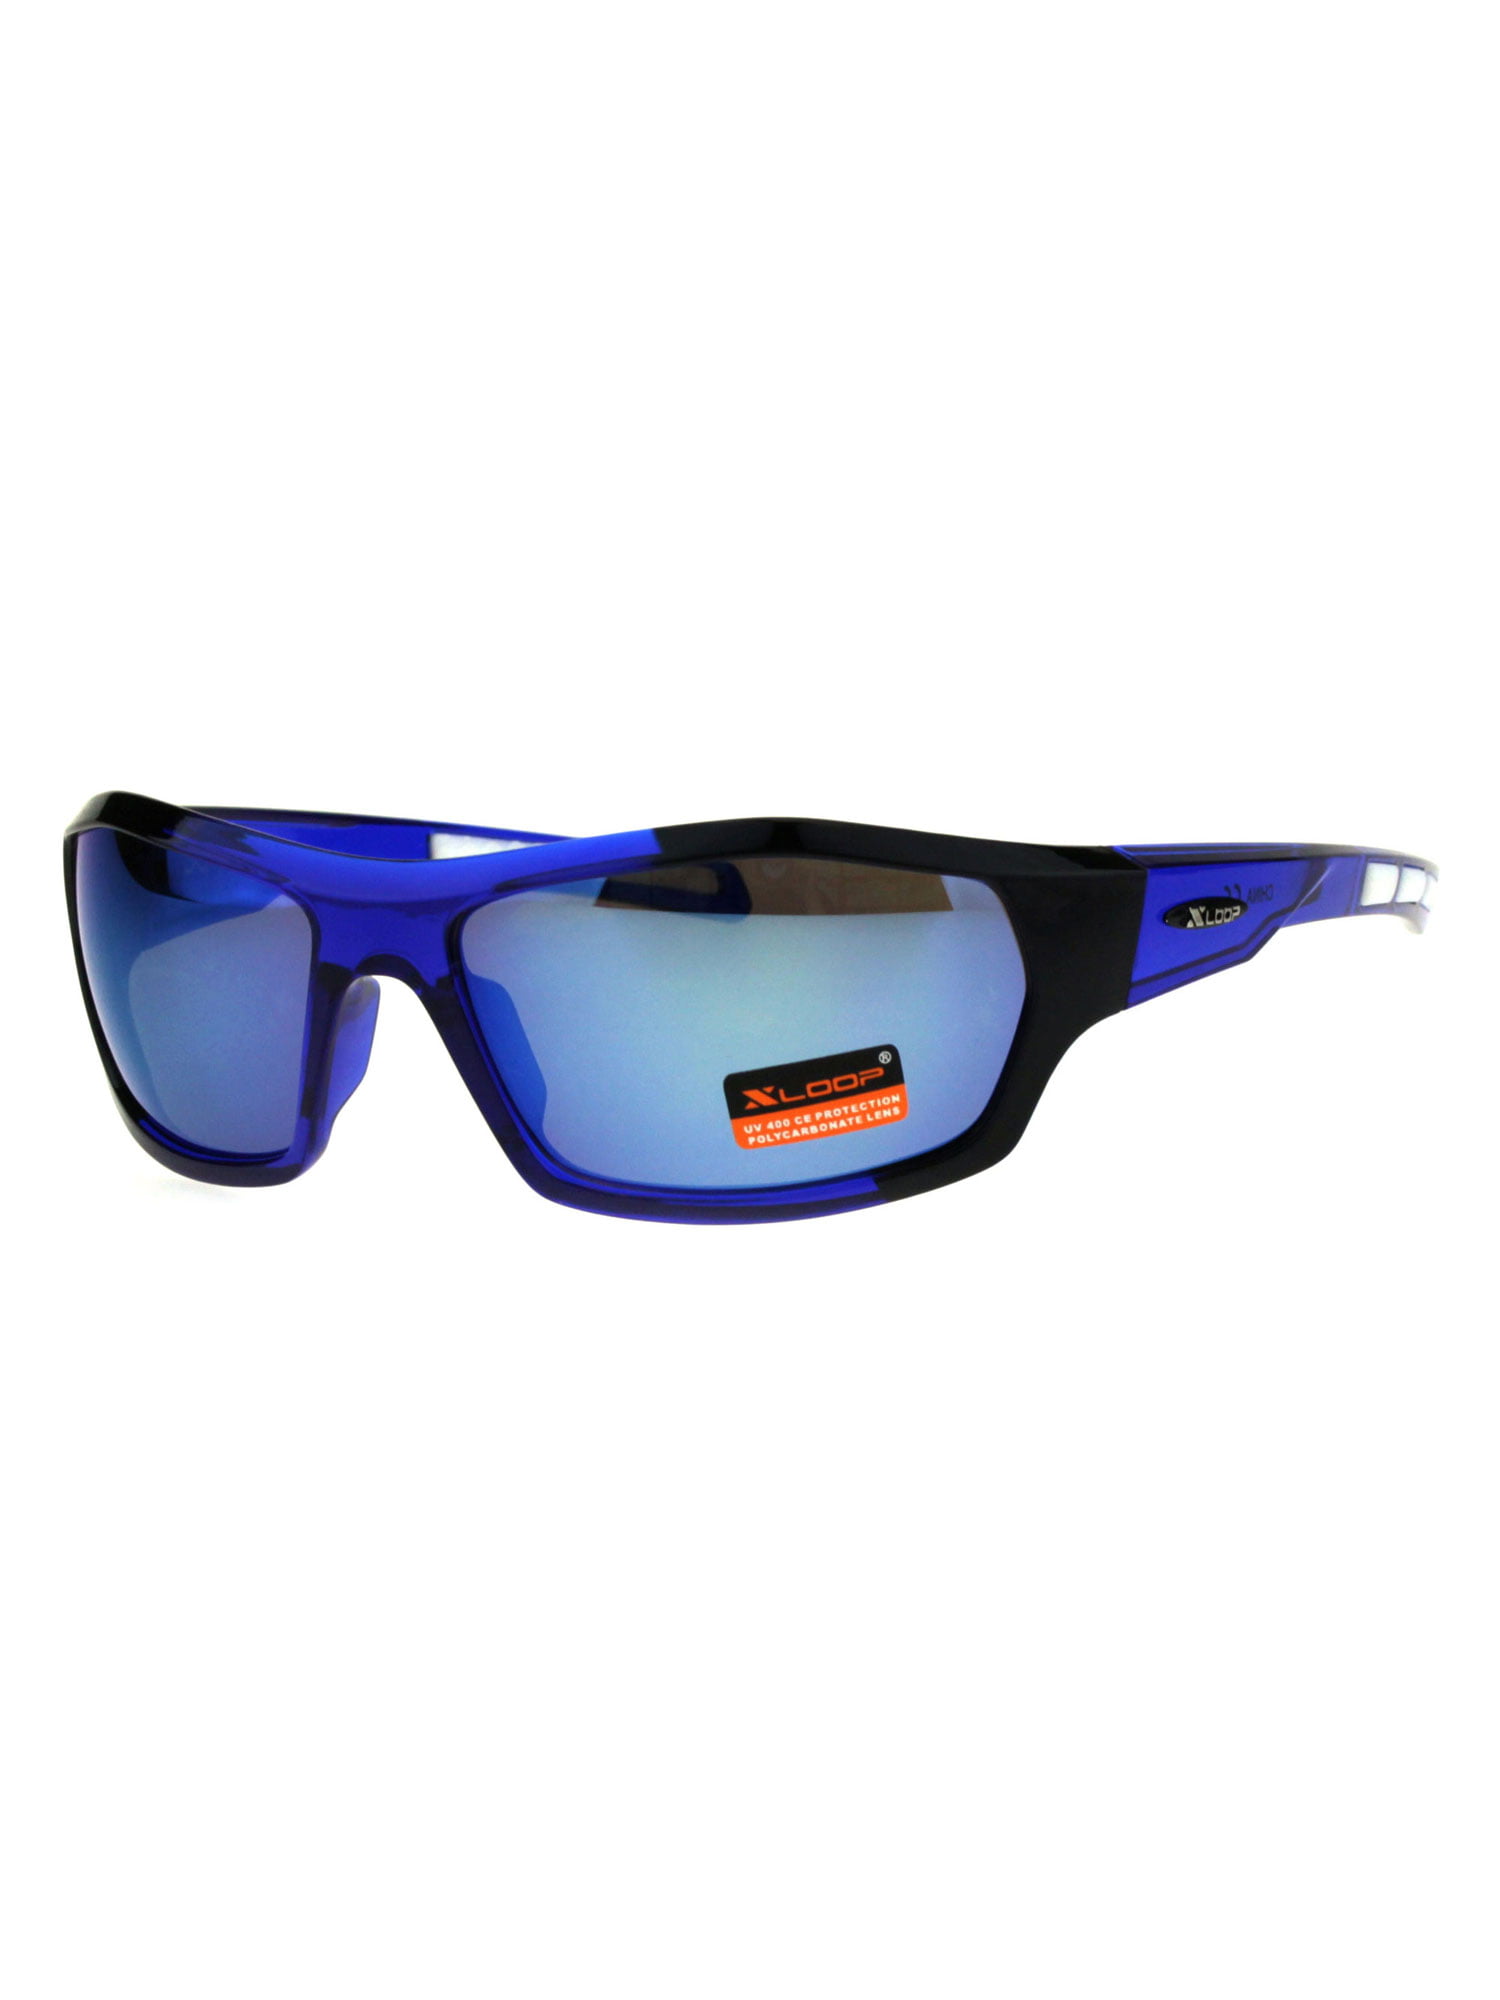 Mens Cycling Triathlon Baseball Water Sports Sunglasses Half Frame Youth Glasses 